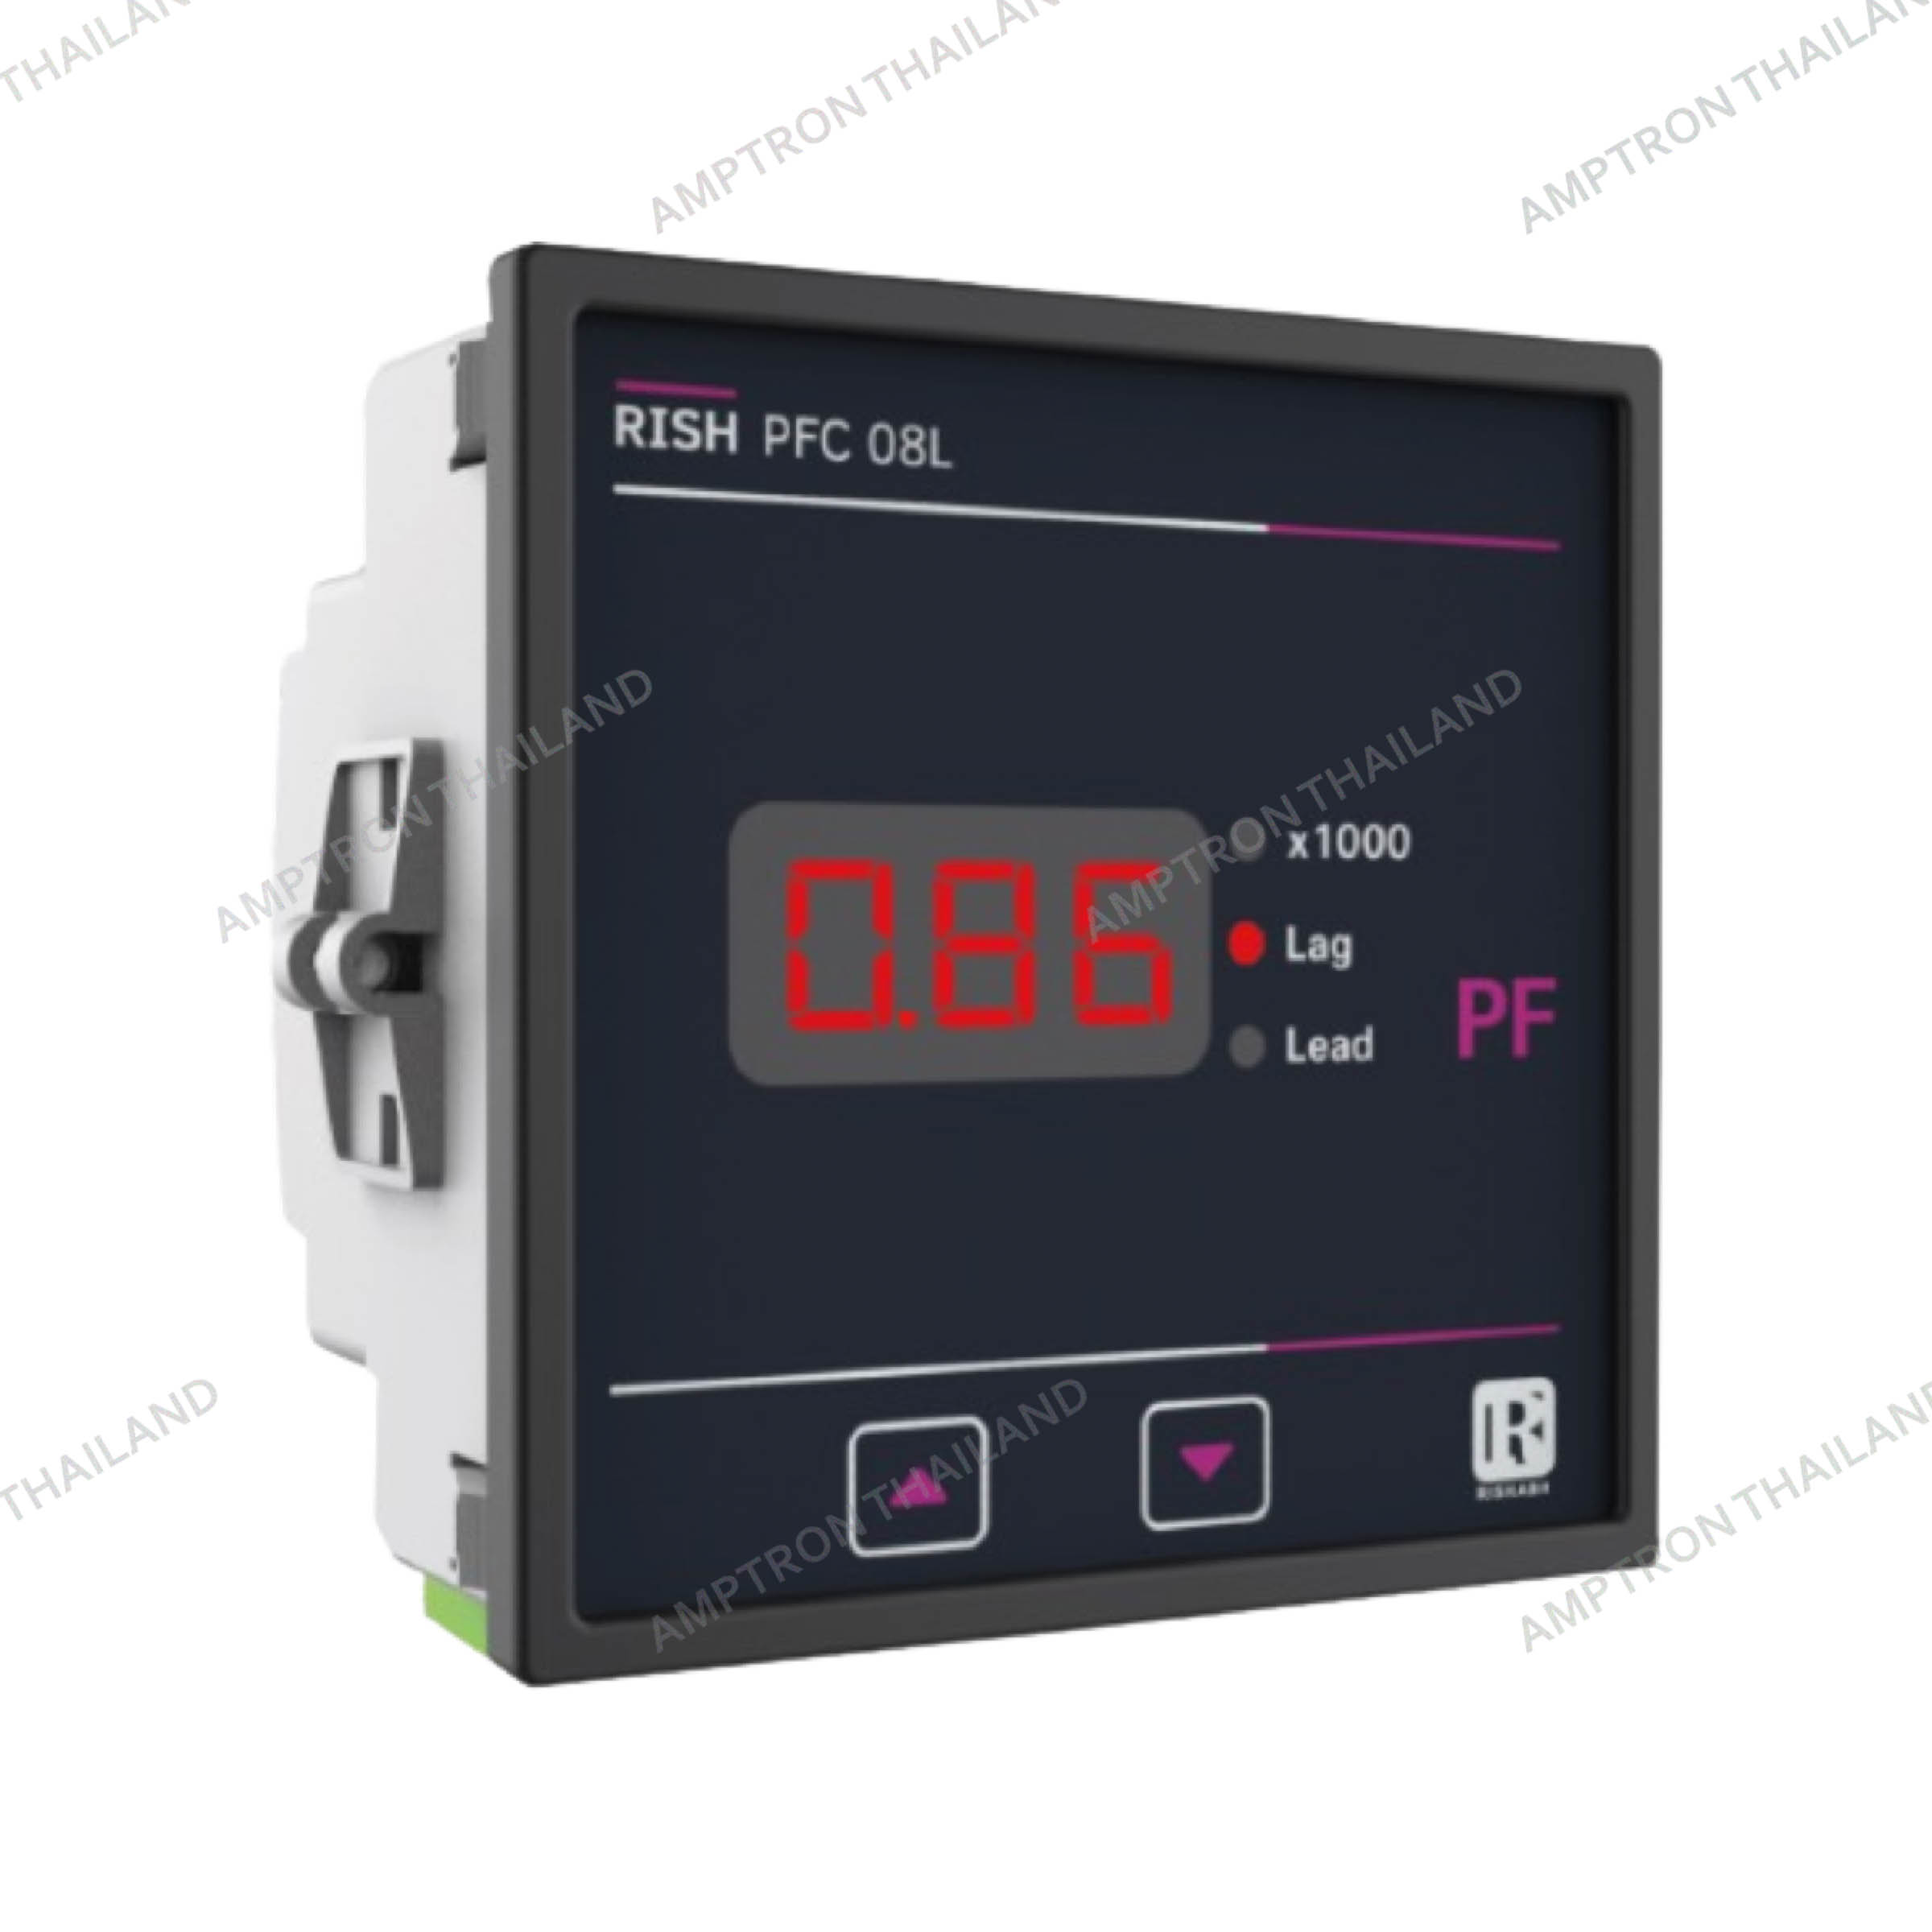 Power Factor Controller RISH PFC 08L